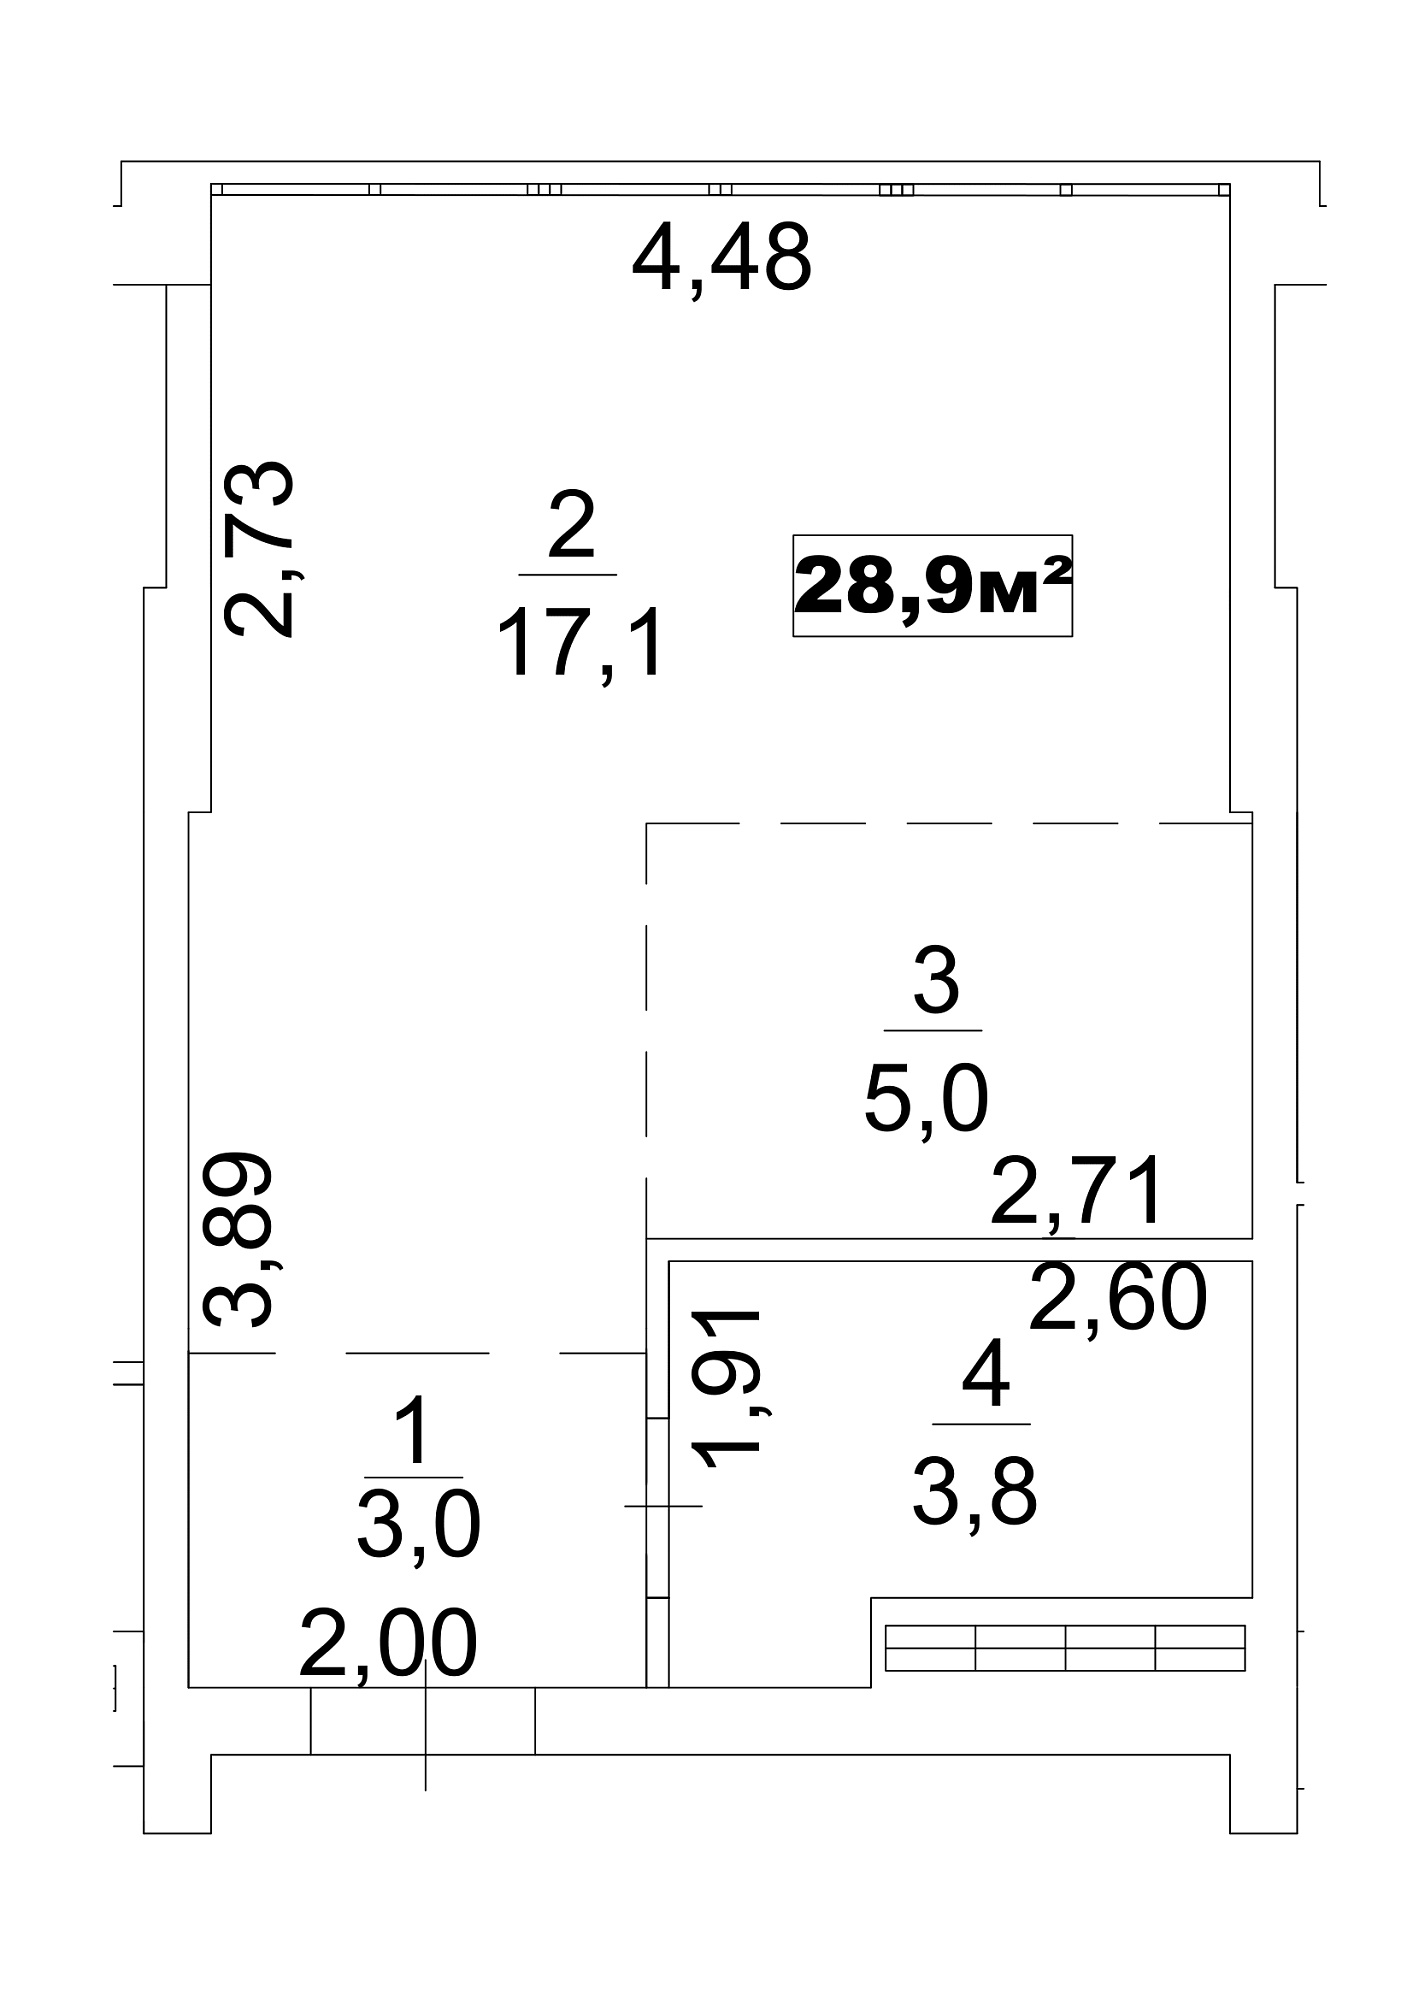 Planning Smart flats area 28.9m2, AB-13-03/00020.